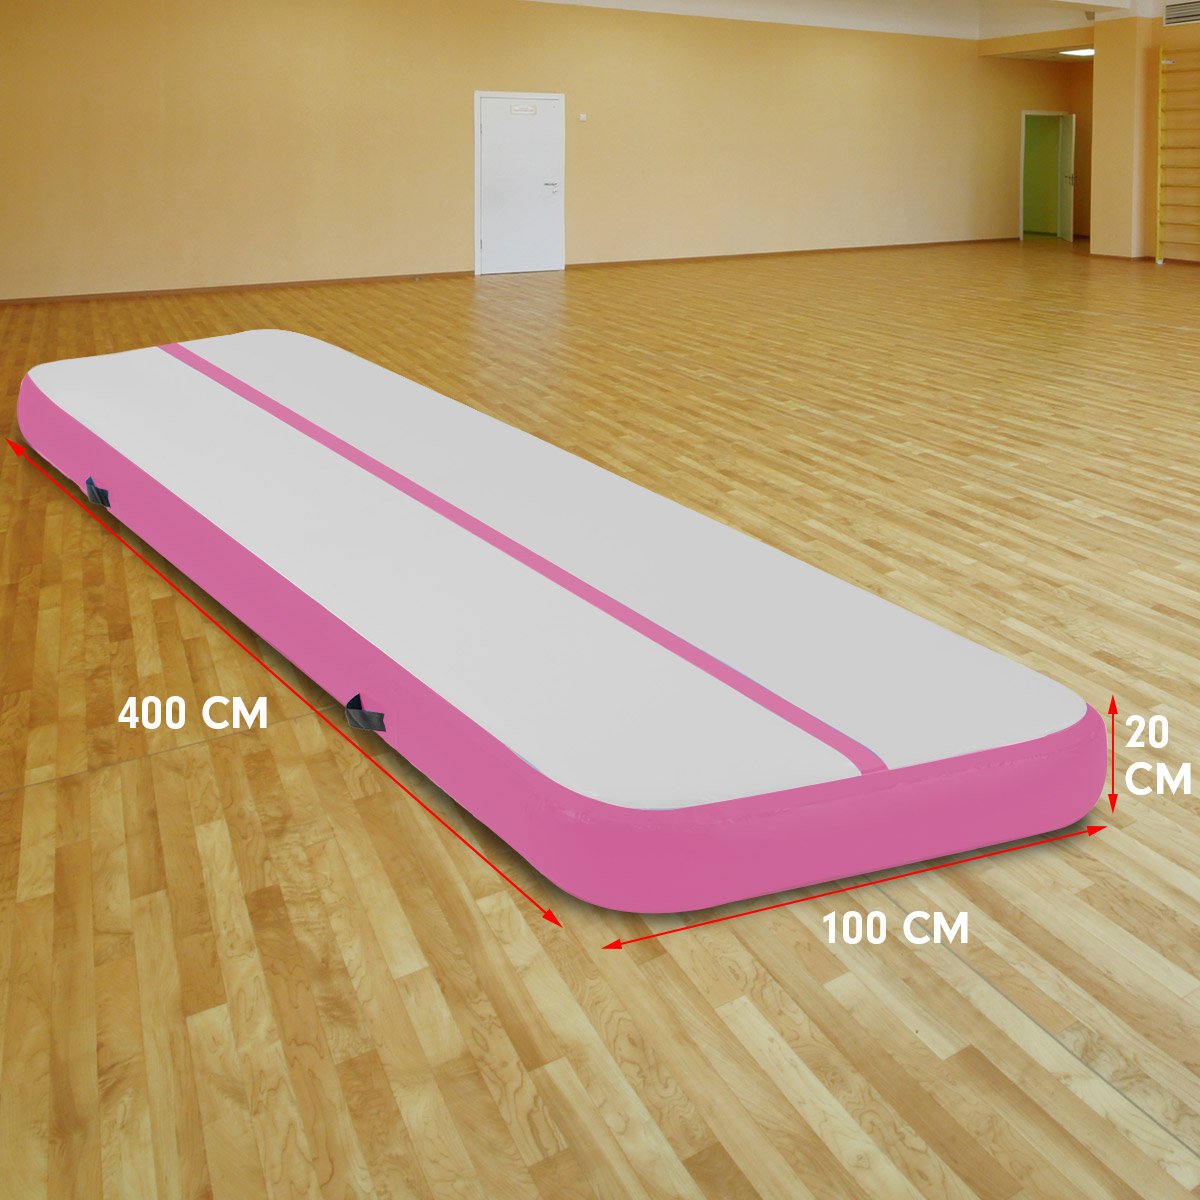 4m x 1m Air Track Inflatable Gymnastics Tumbling Mat - Pink